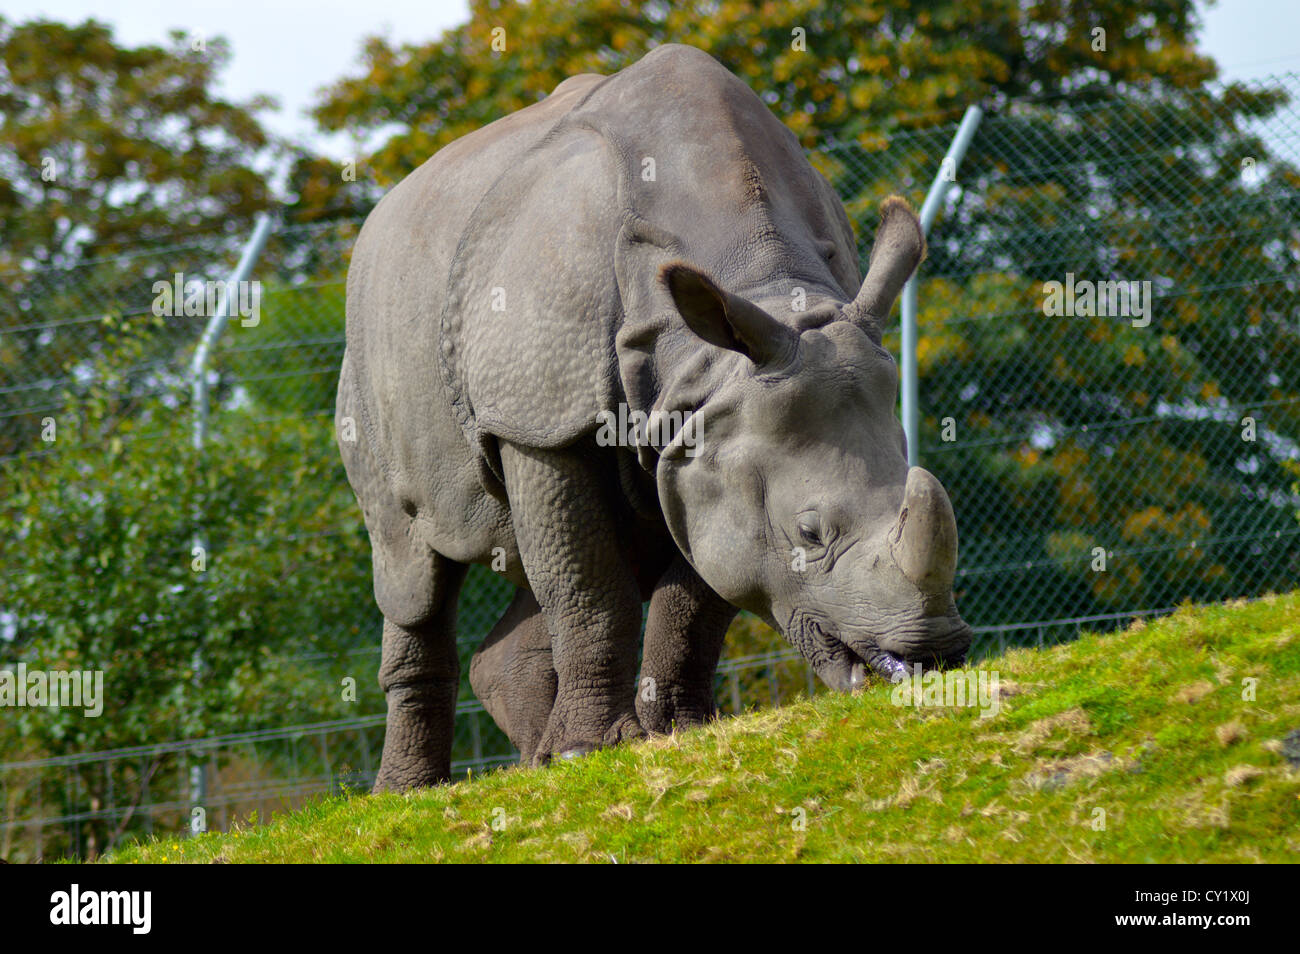 Rhino grazing in field Stock Photo